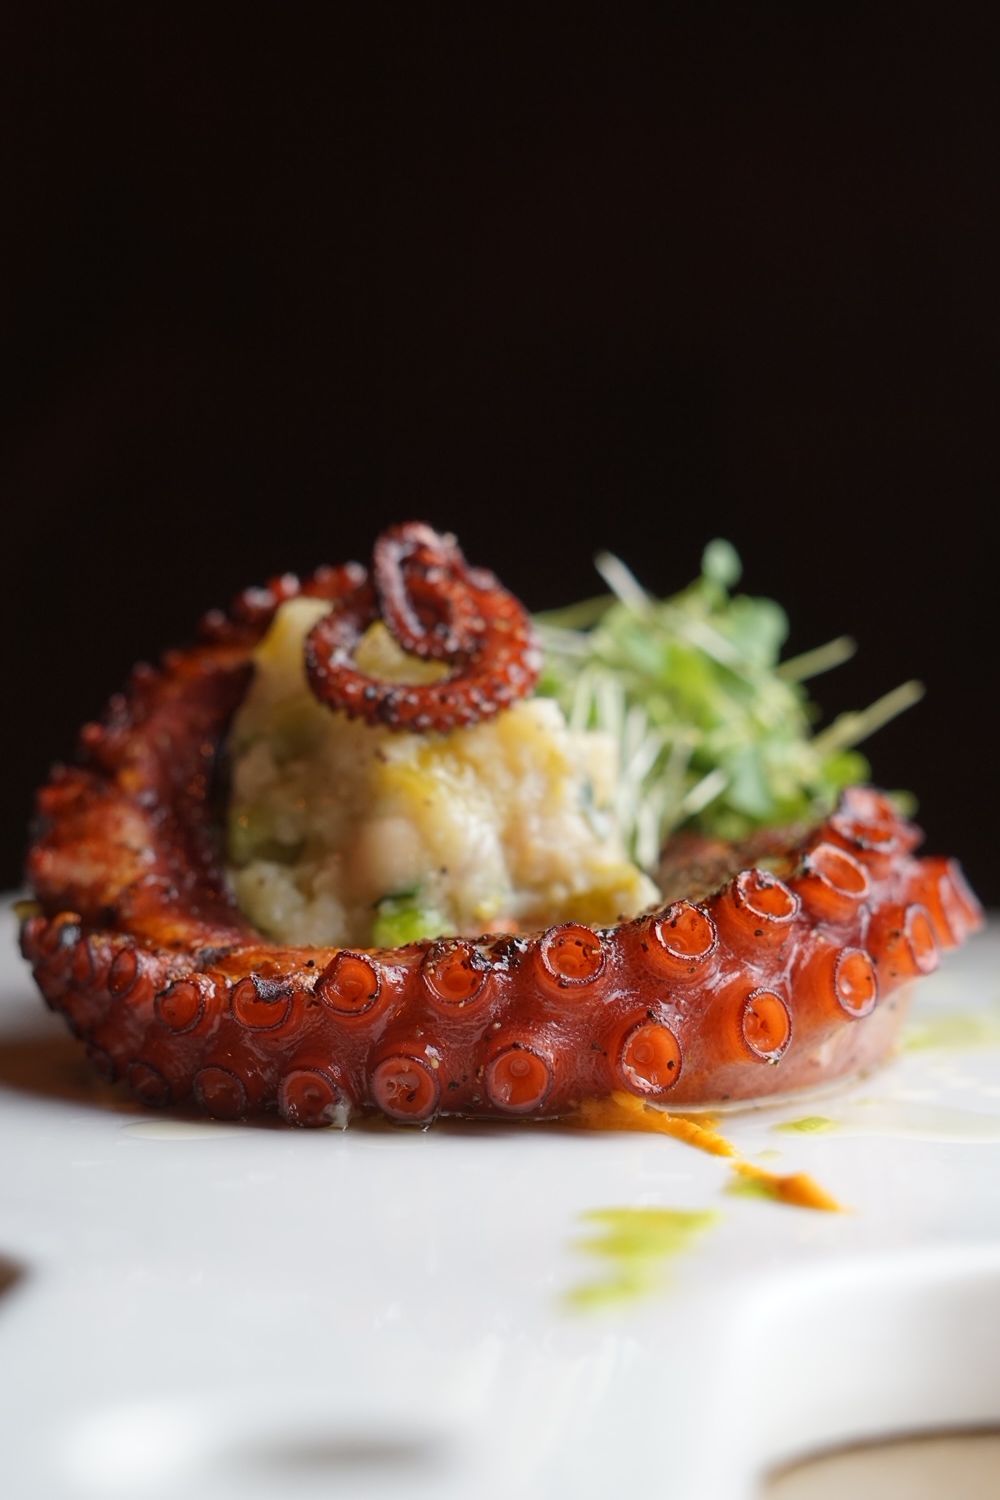 Grilled spanish octopus 
cannellini beans, potato salad, harissa smeared 
